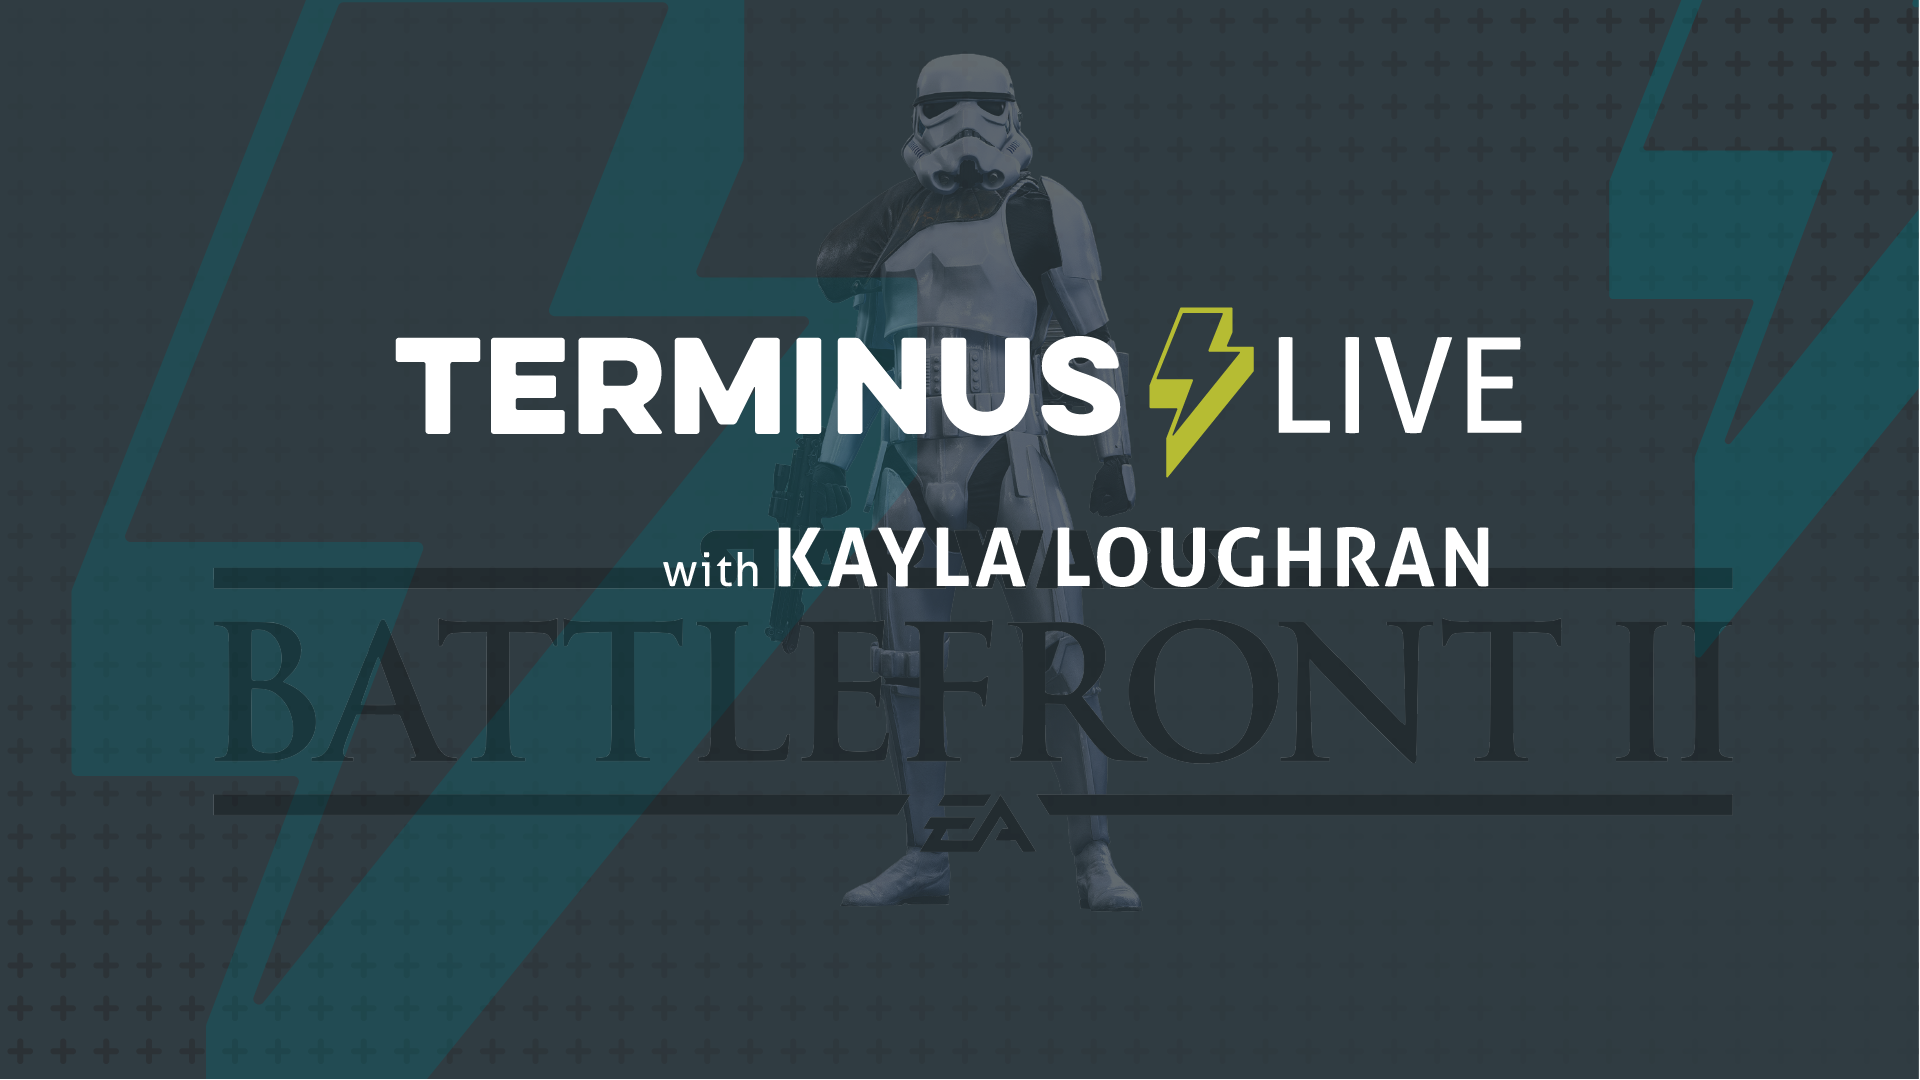 TERMINUS Live: Kayla Loughran plays Battlefront II